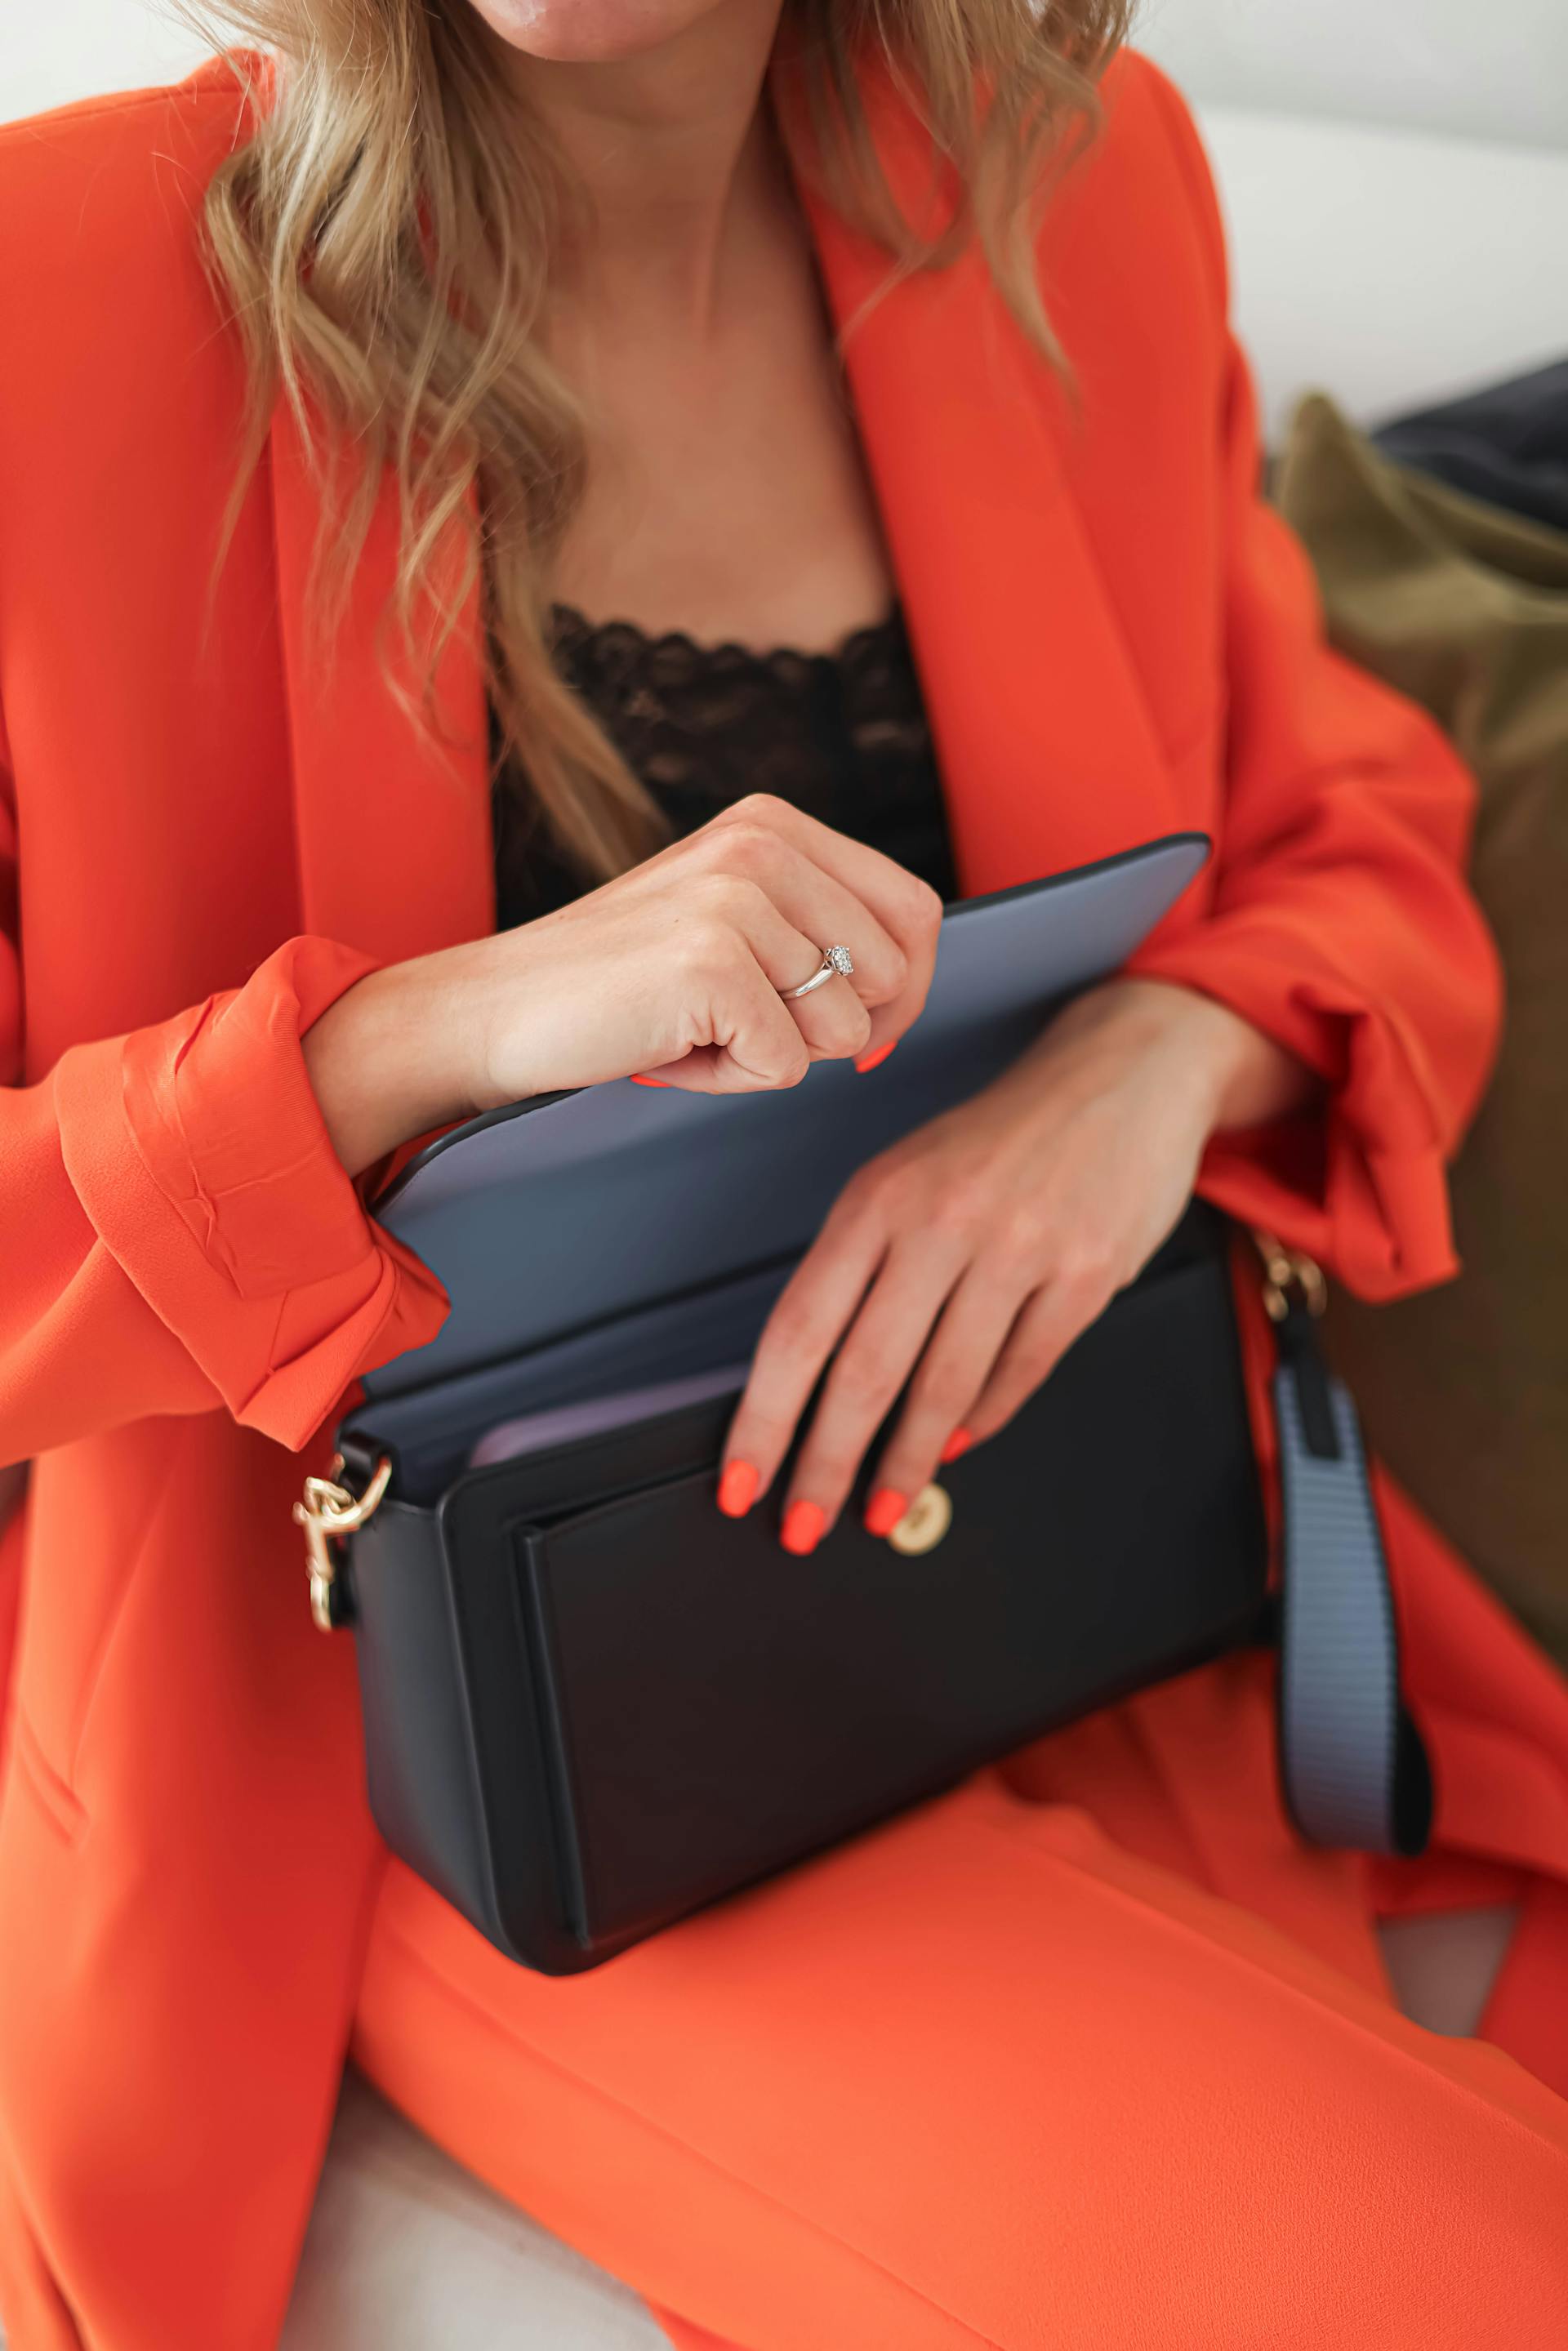 A woman holding her handbag | Source: Pexels